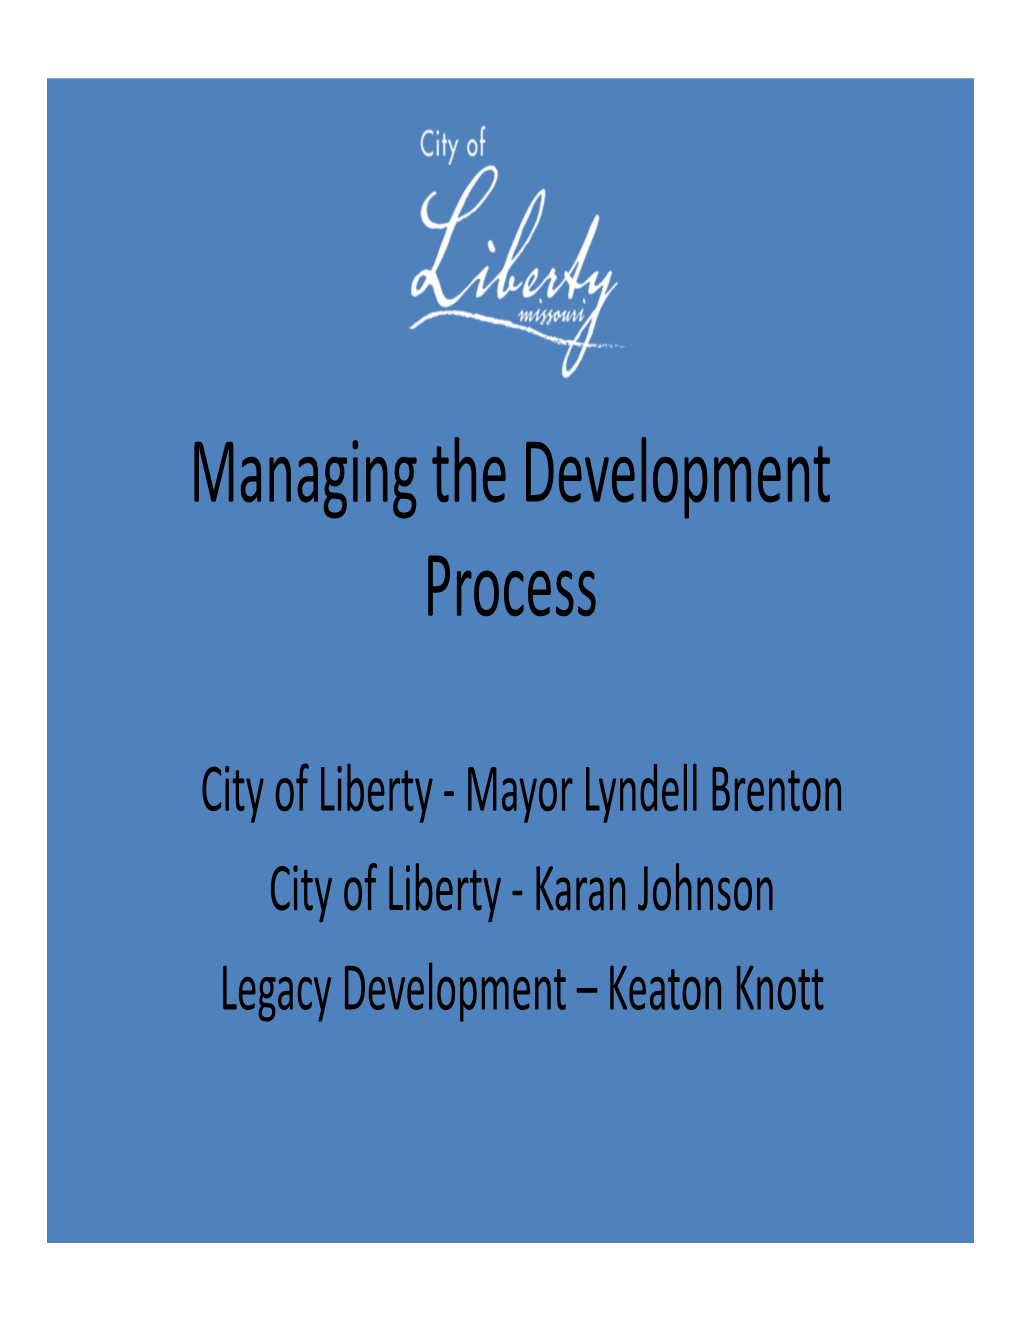 Managing the Development Process